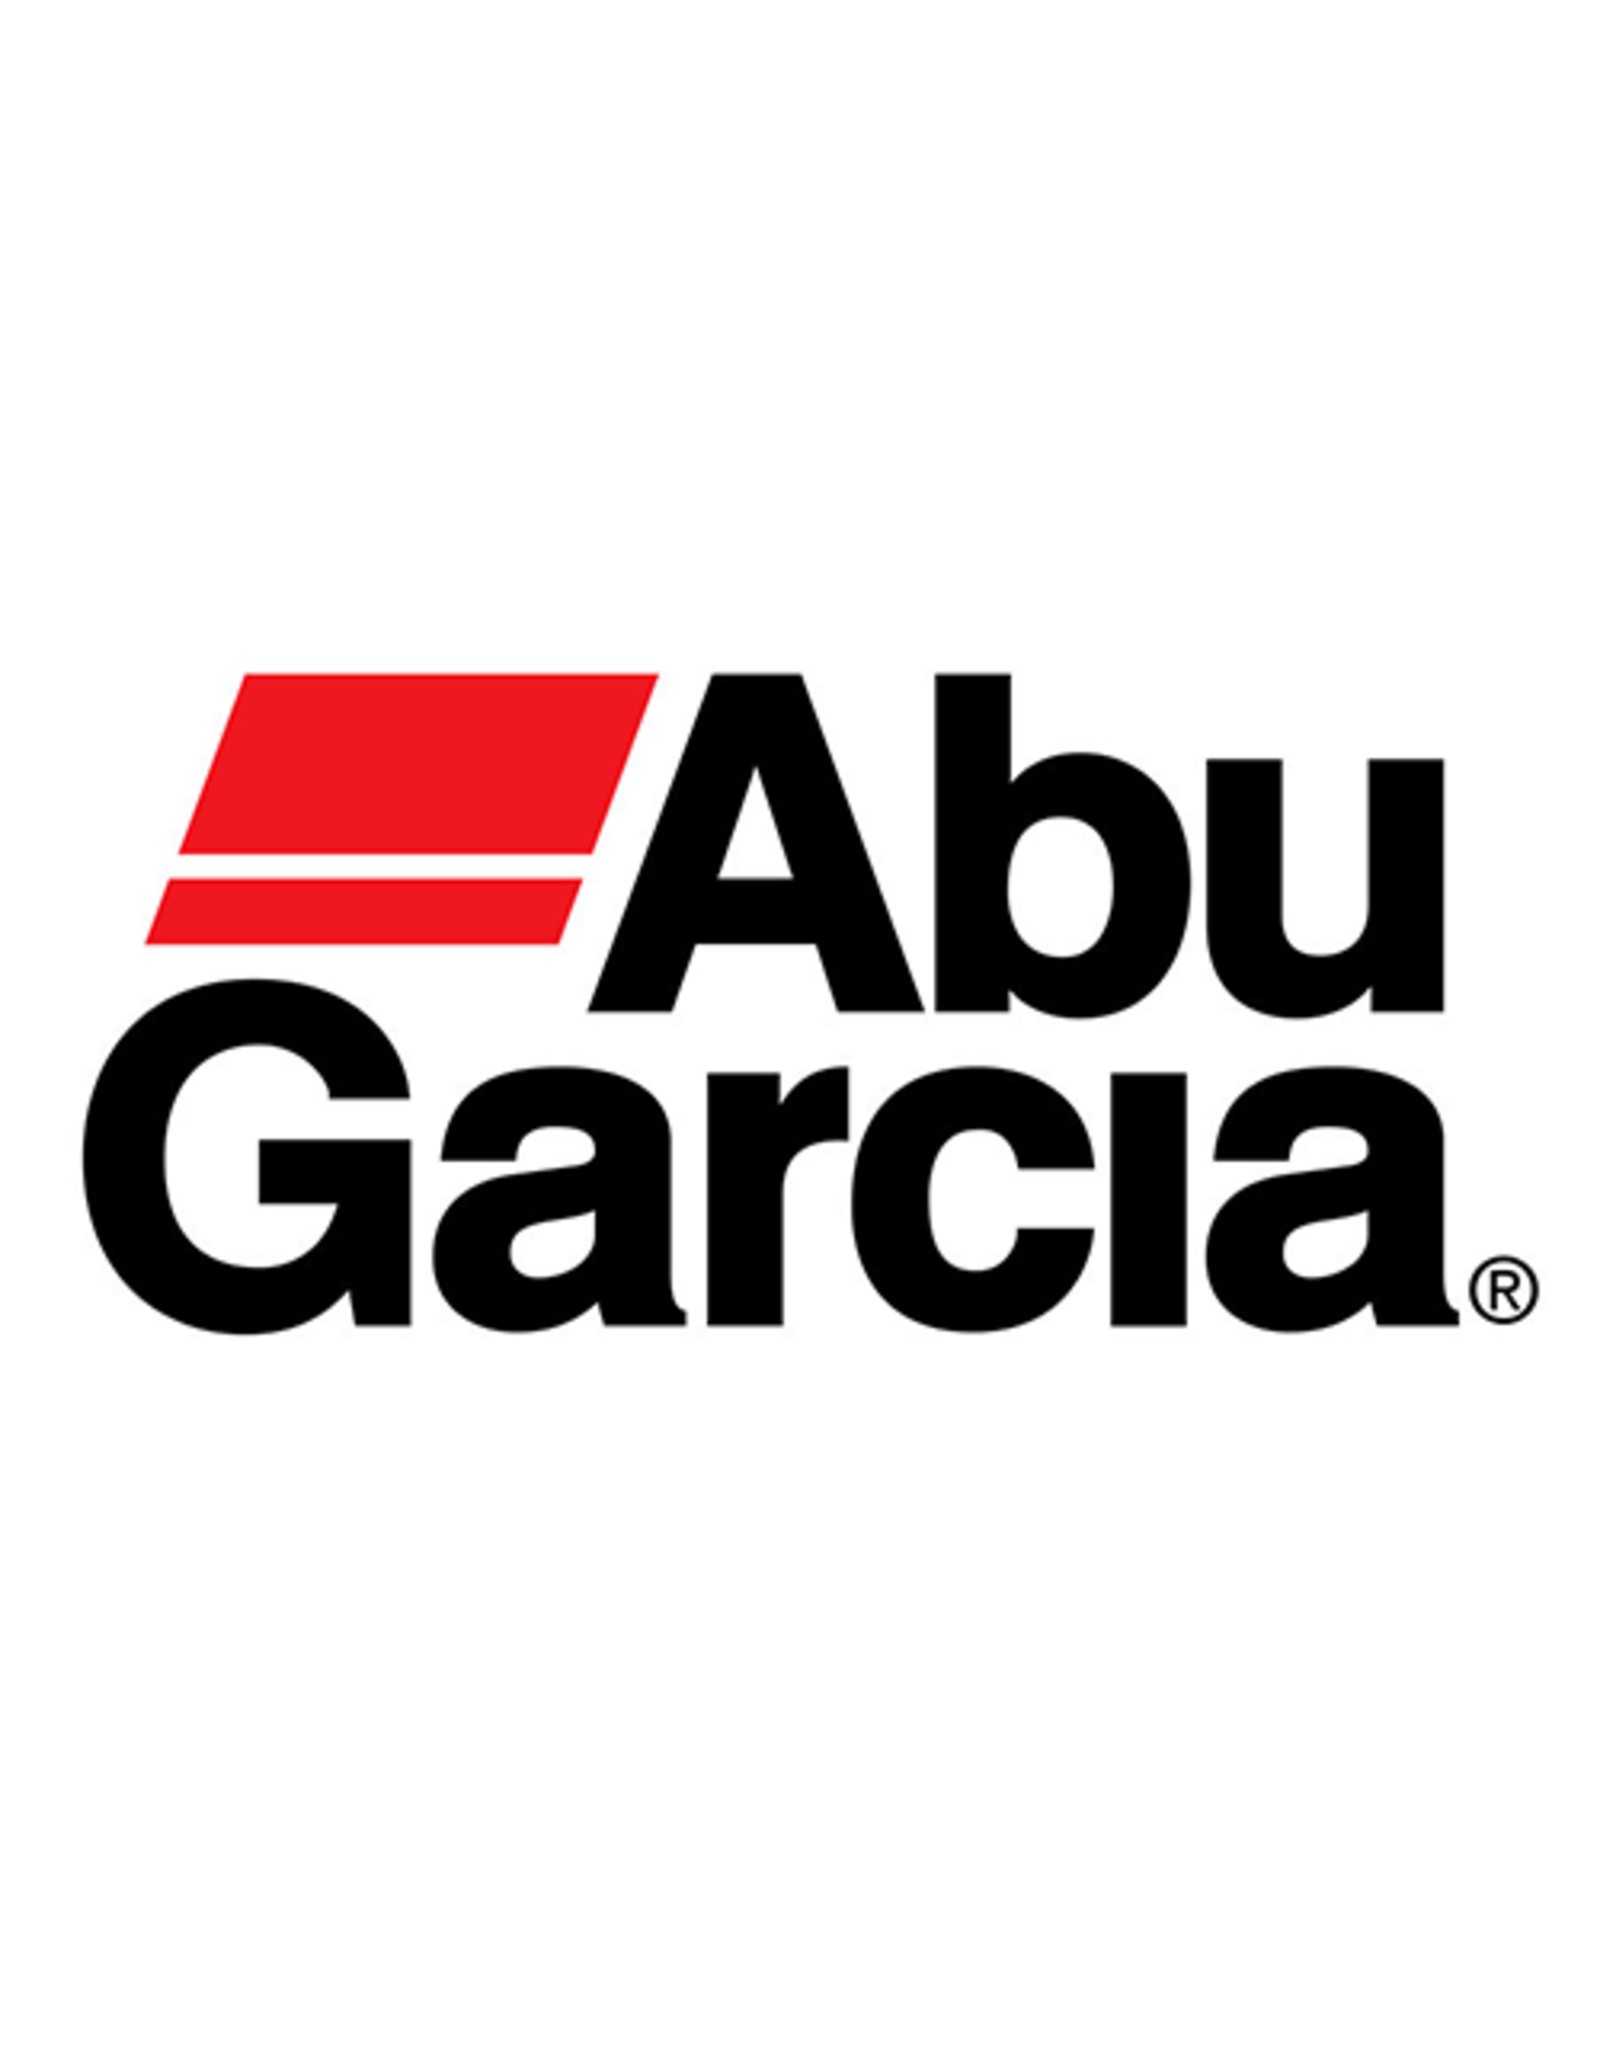 Abu Garcia 1313496  HANDLE W/ NO GRIPS